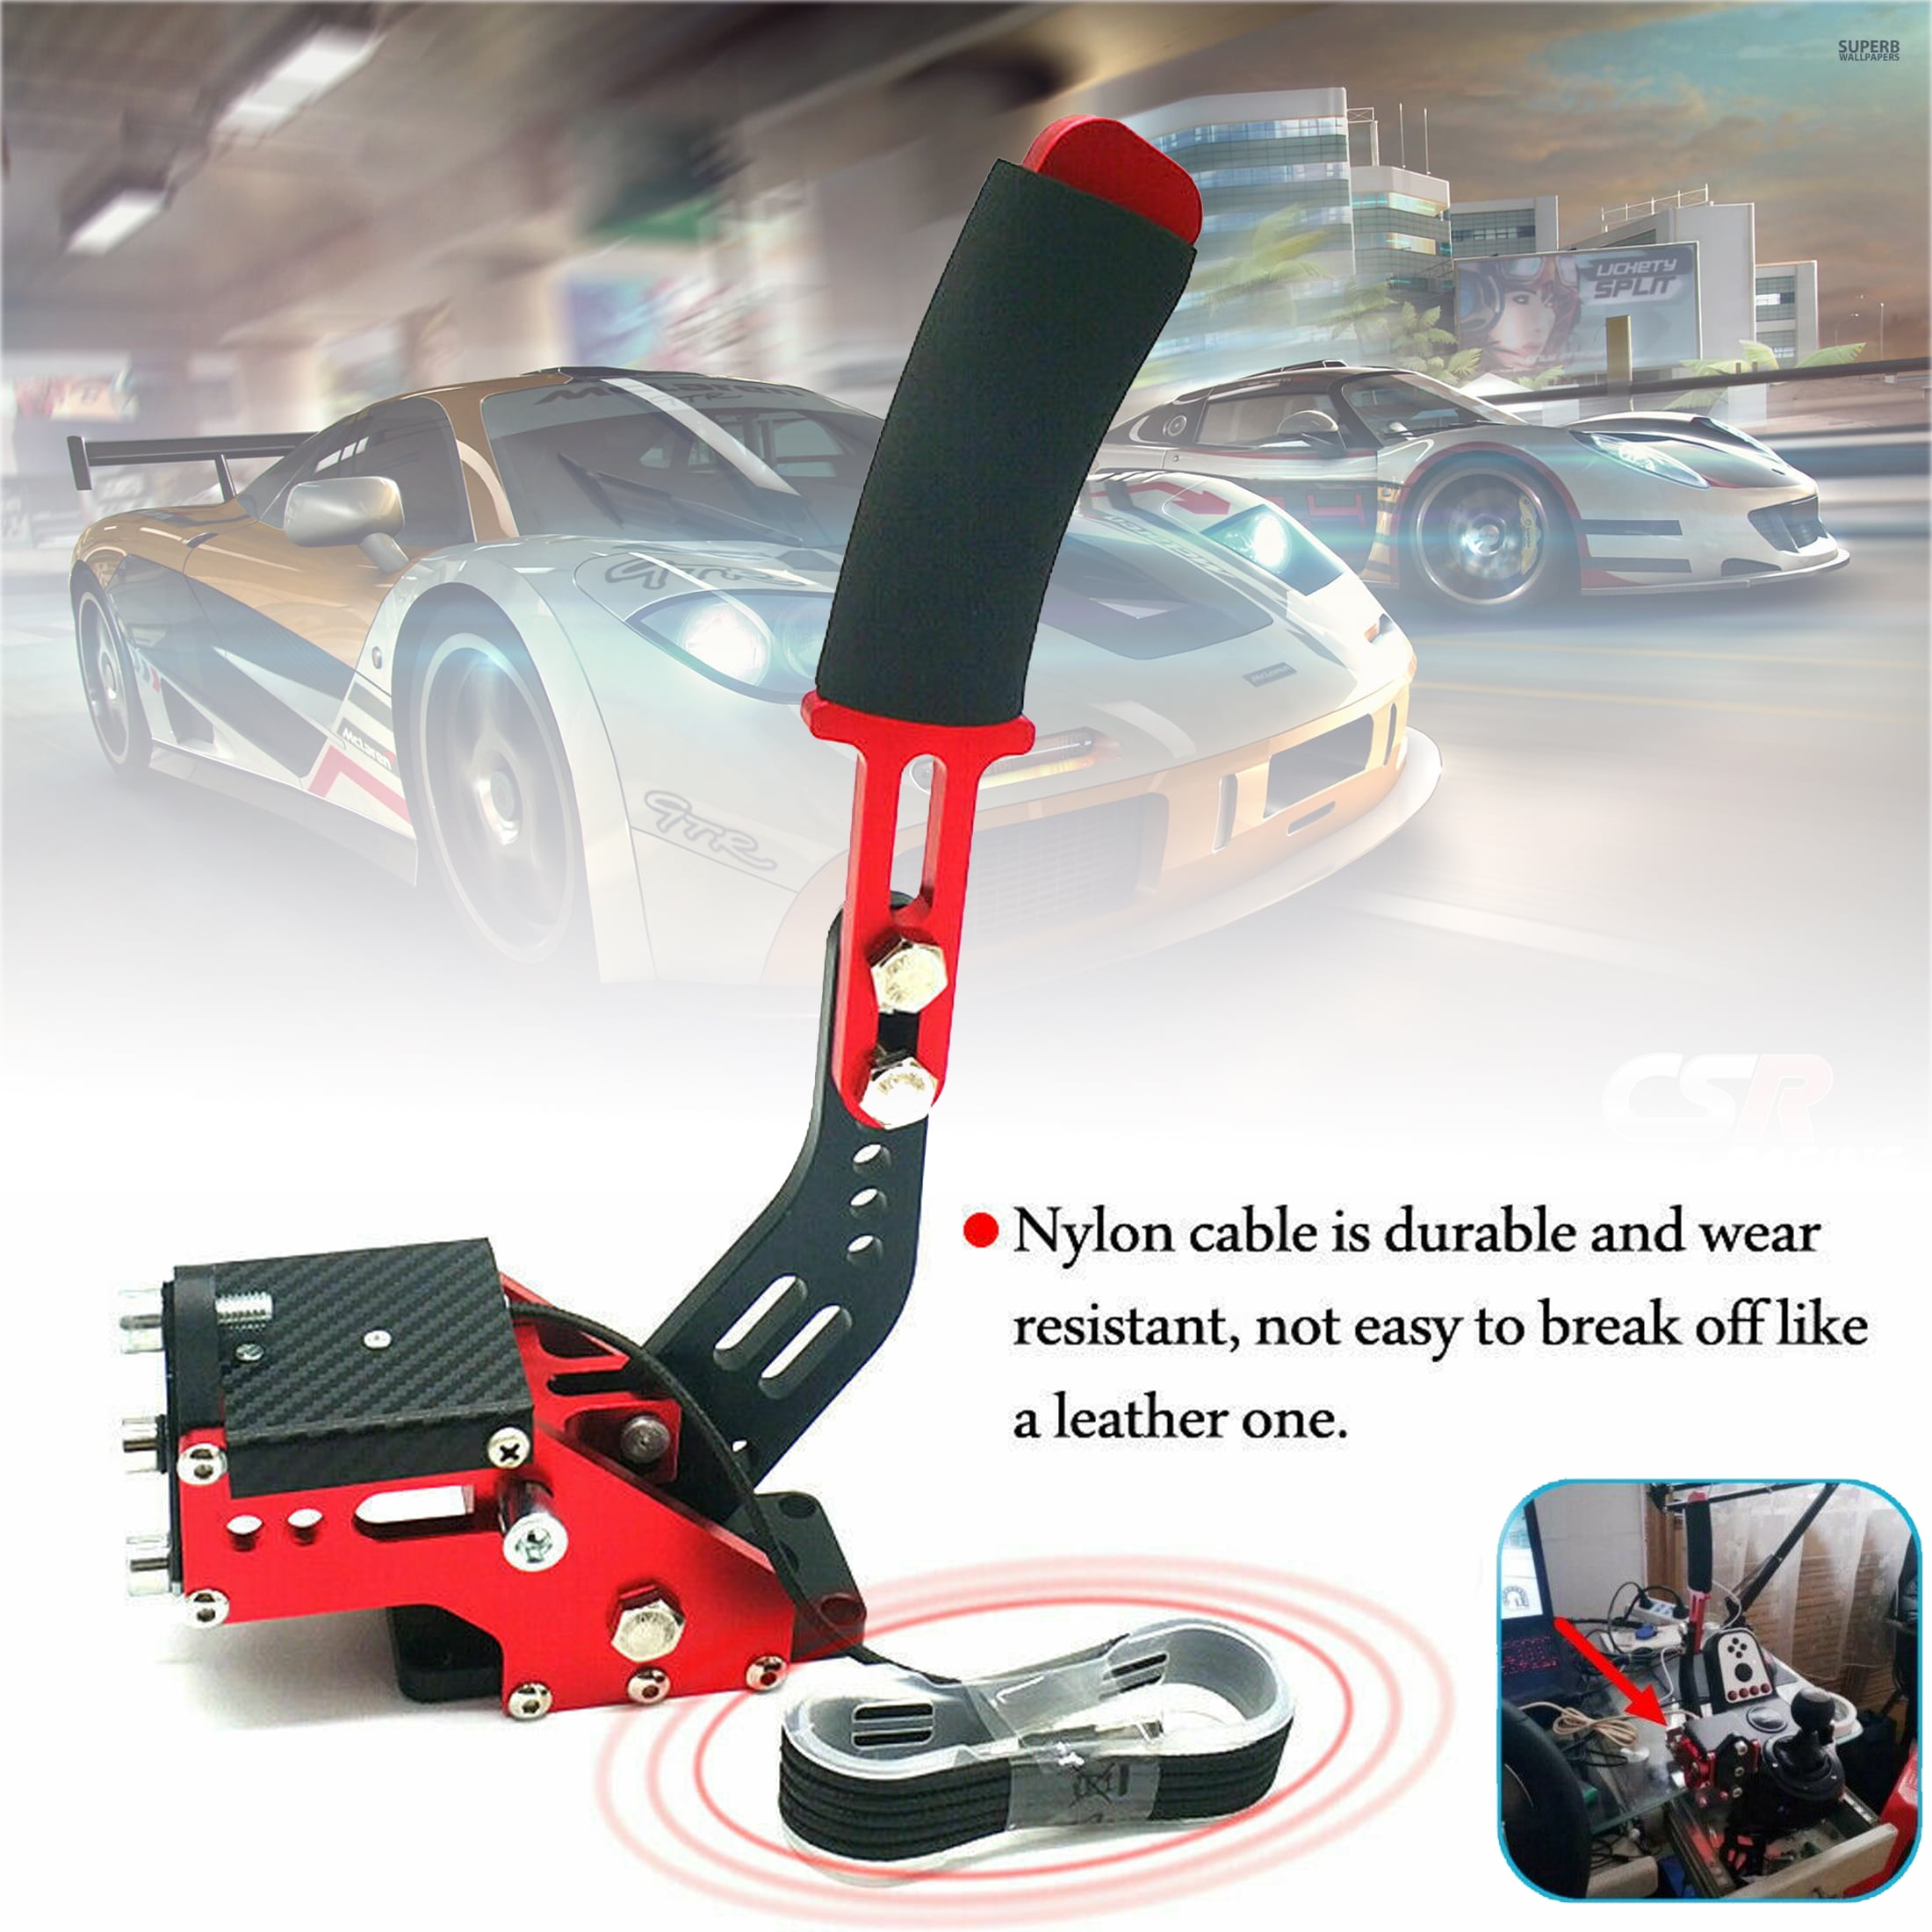 Fockety USB Handbrake for PC, Professional 14Bit Dirt Rally Racing  Handbrake, Plug and Play, Universal Gaming Peripherals for Sim Racing Game,  for